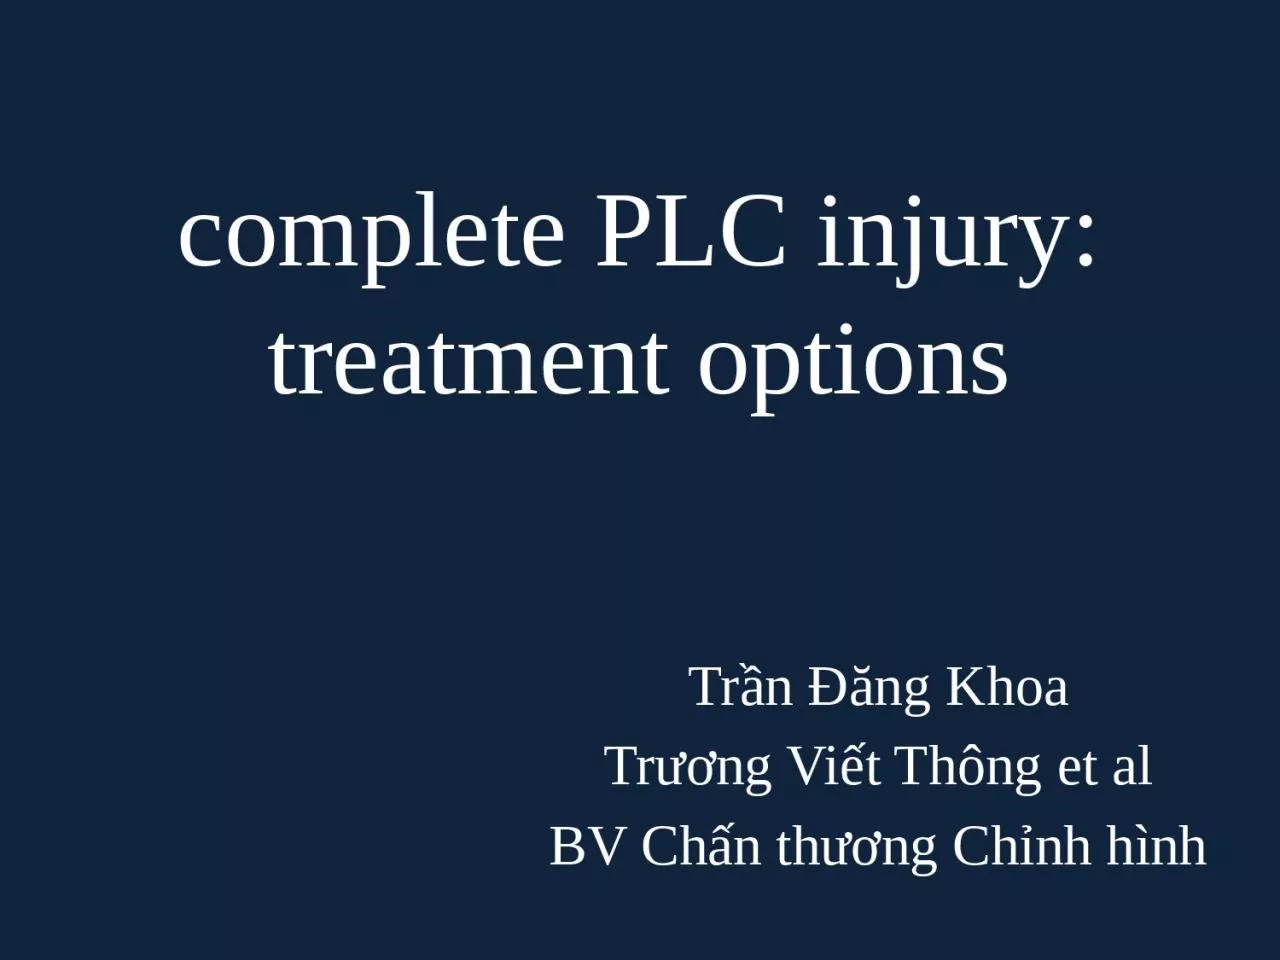 complete PLC injury: treatment